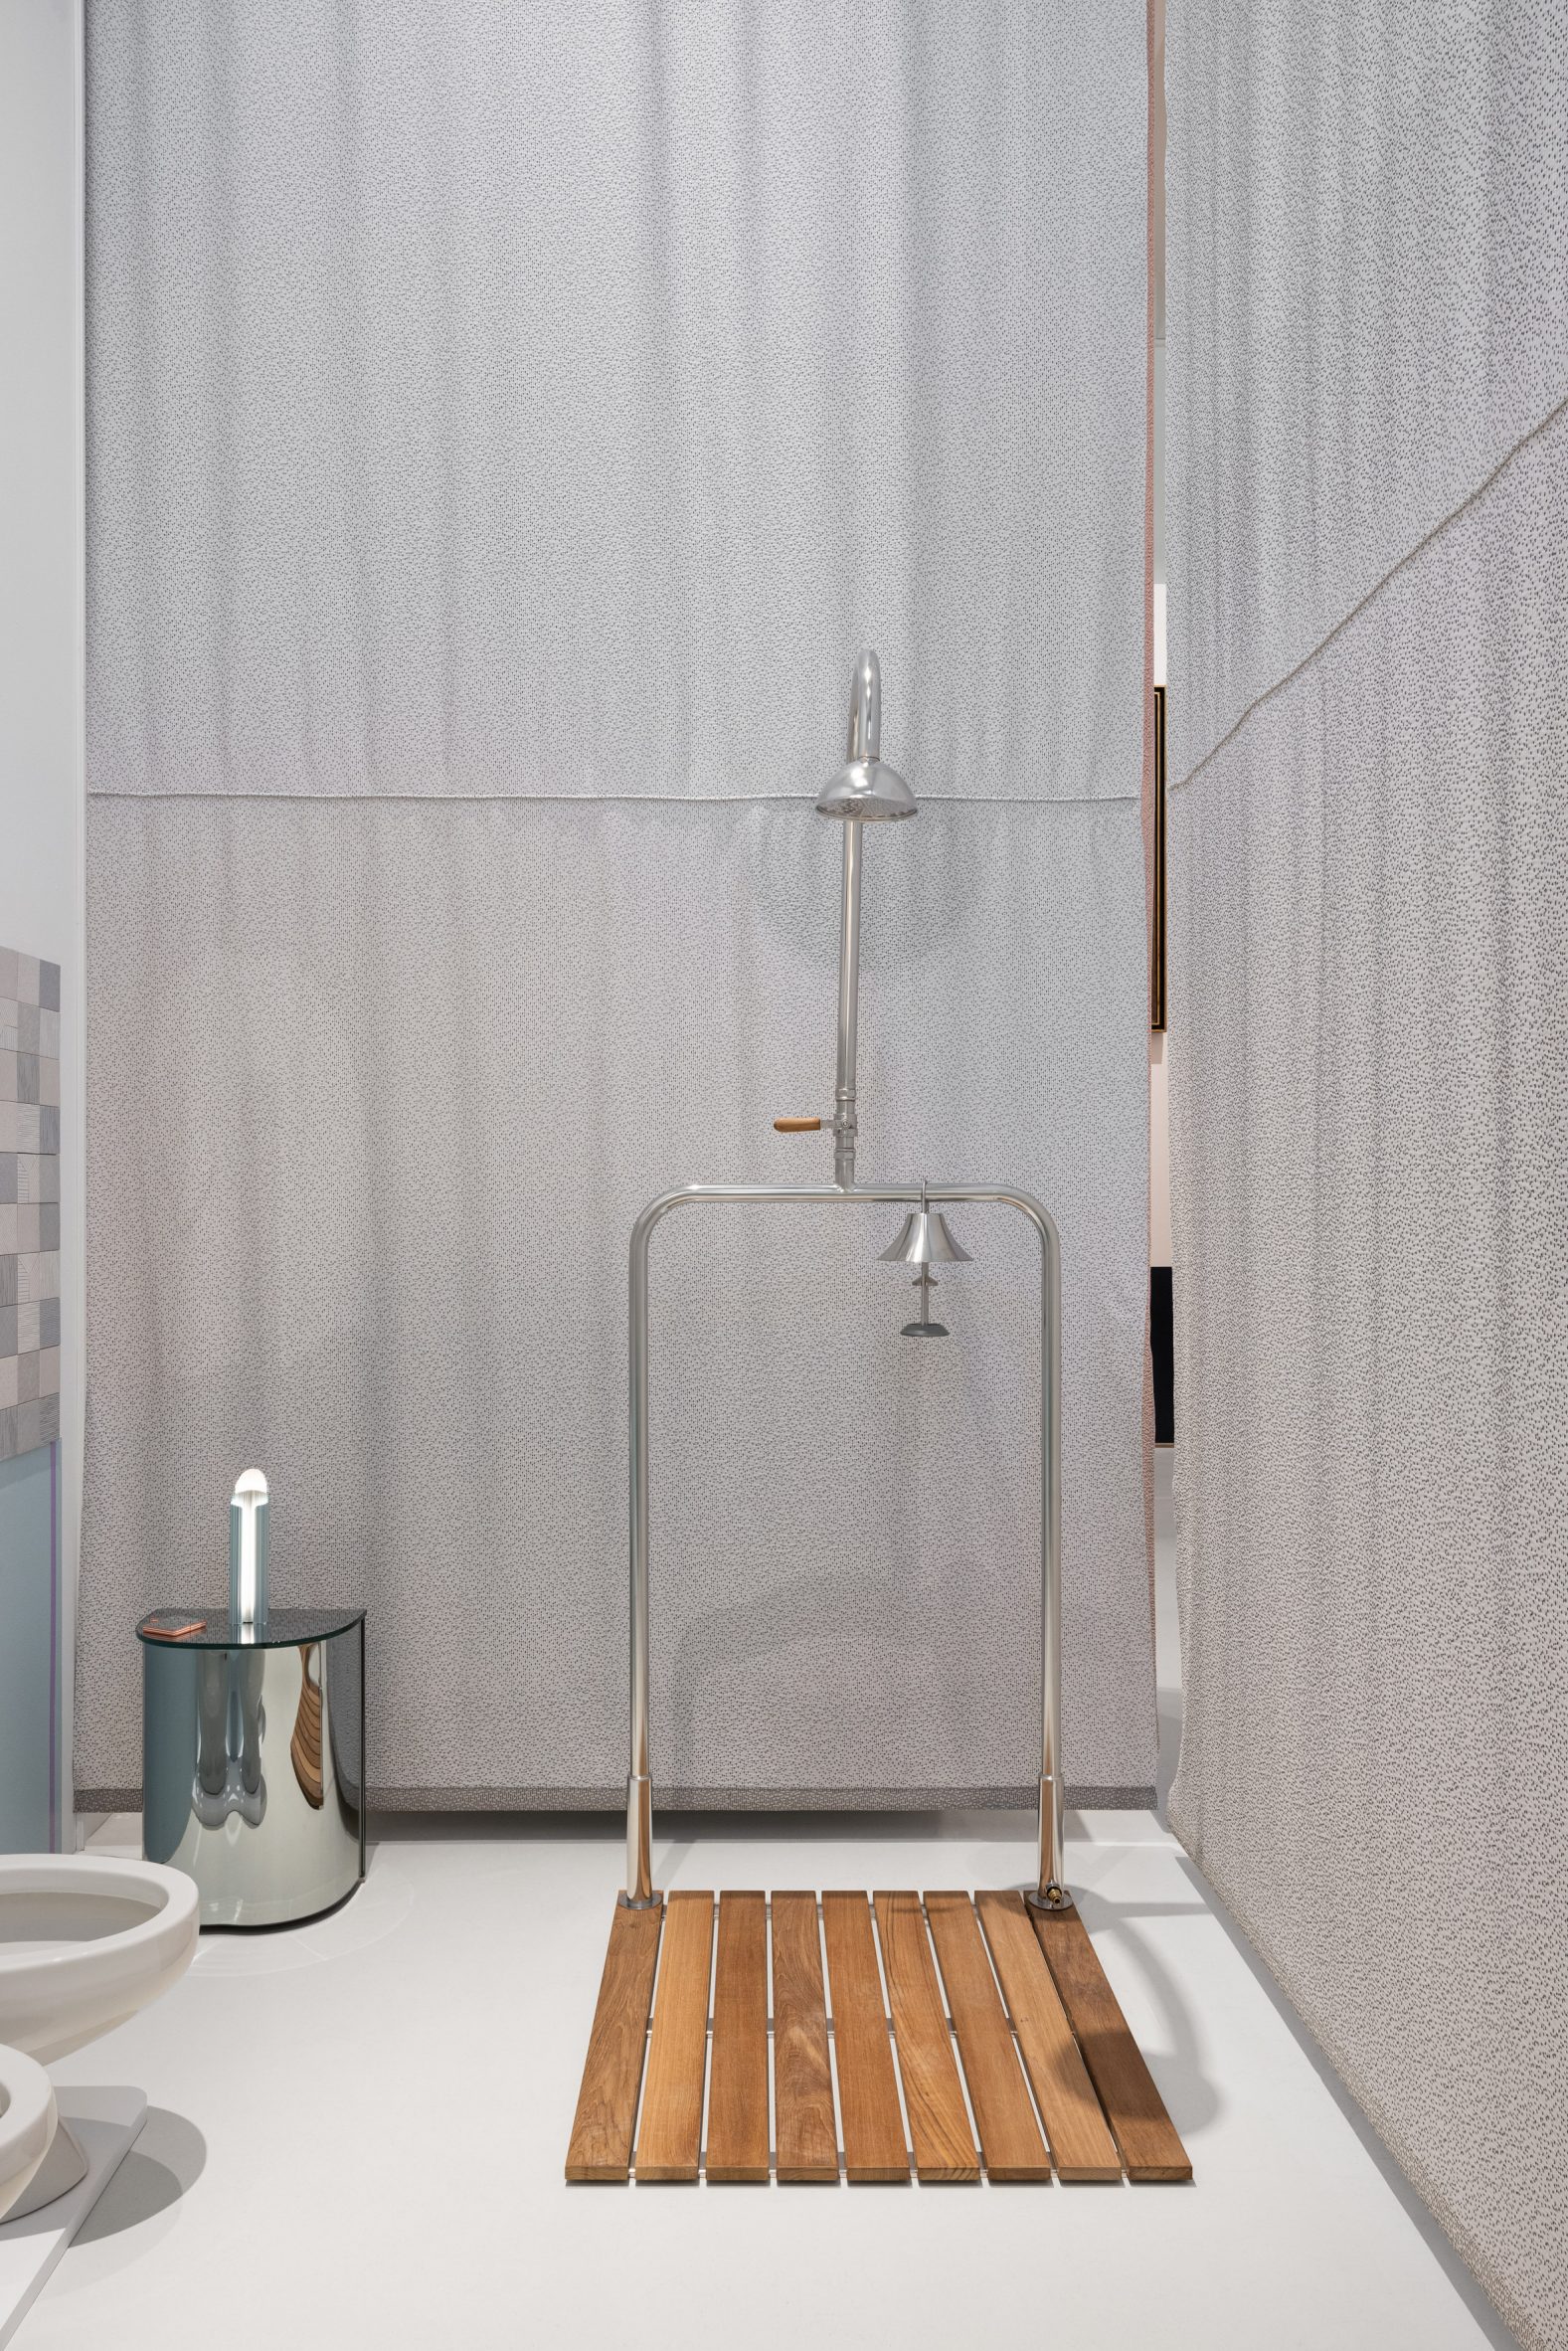 Bathroom by Inga Sempé at Triennale Milano